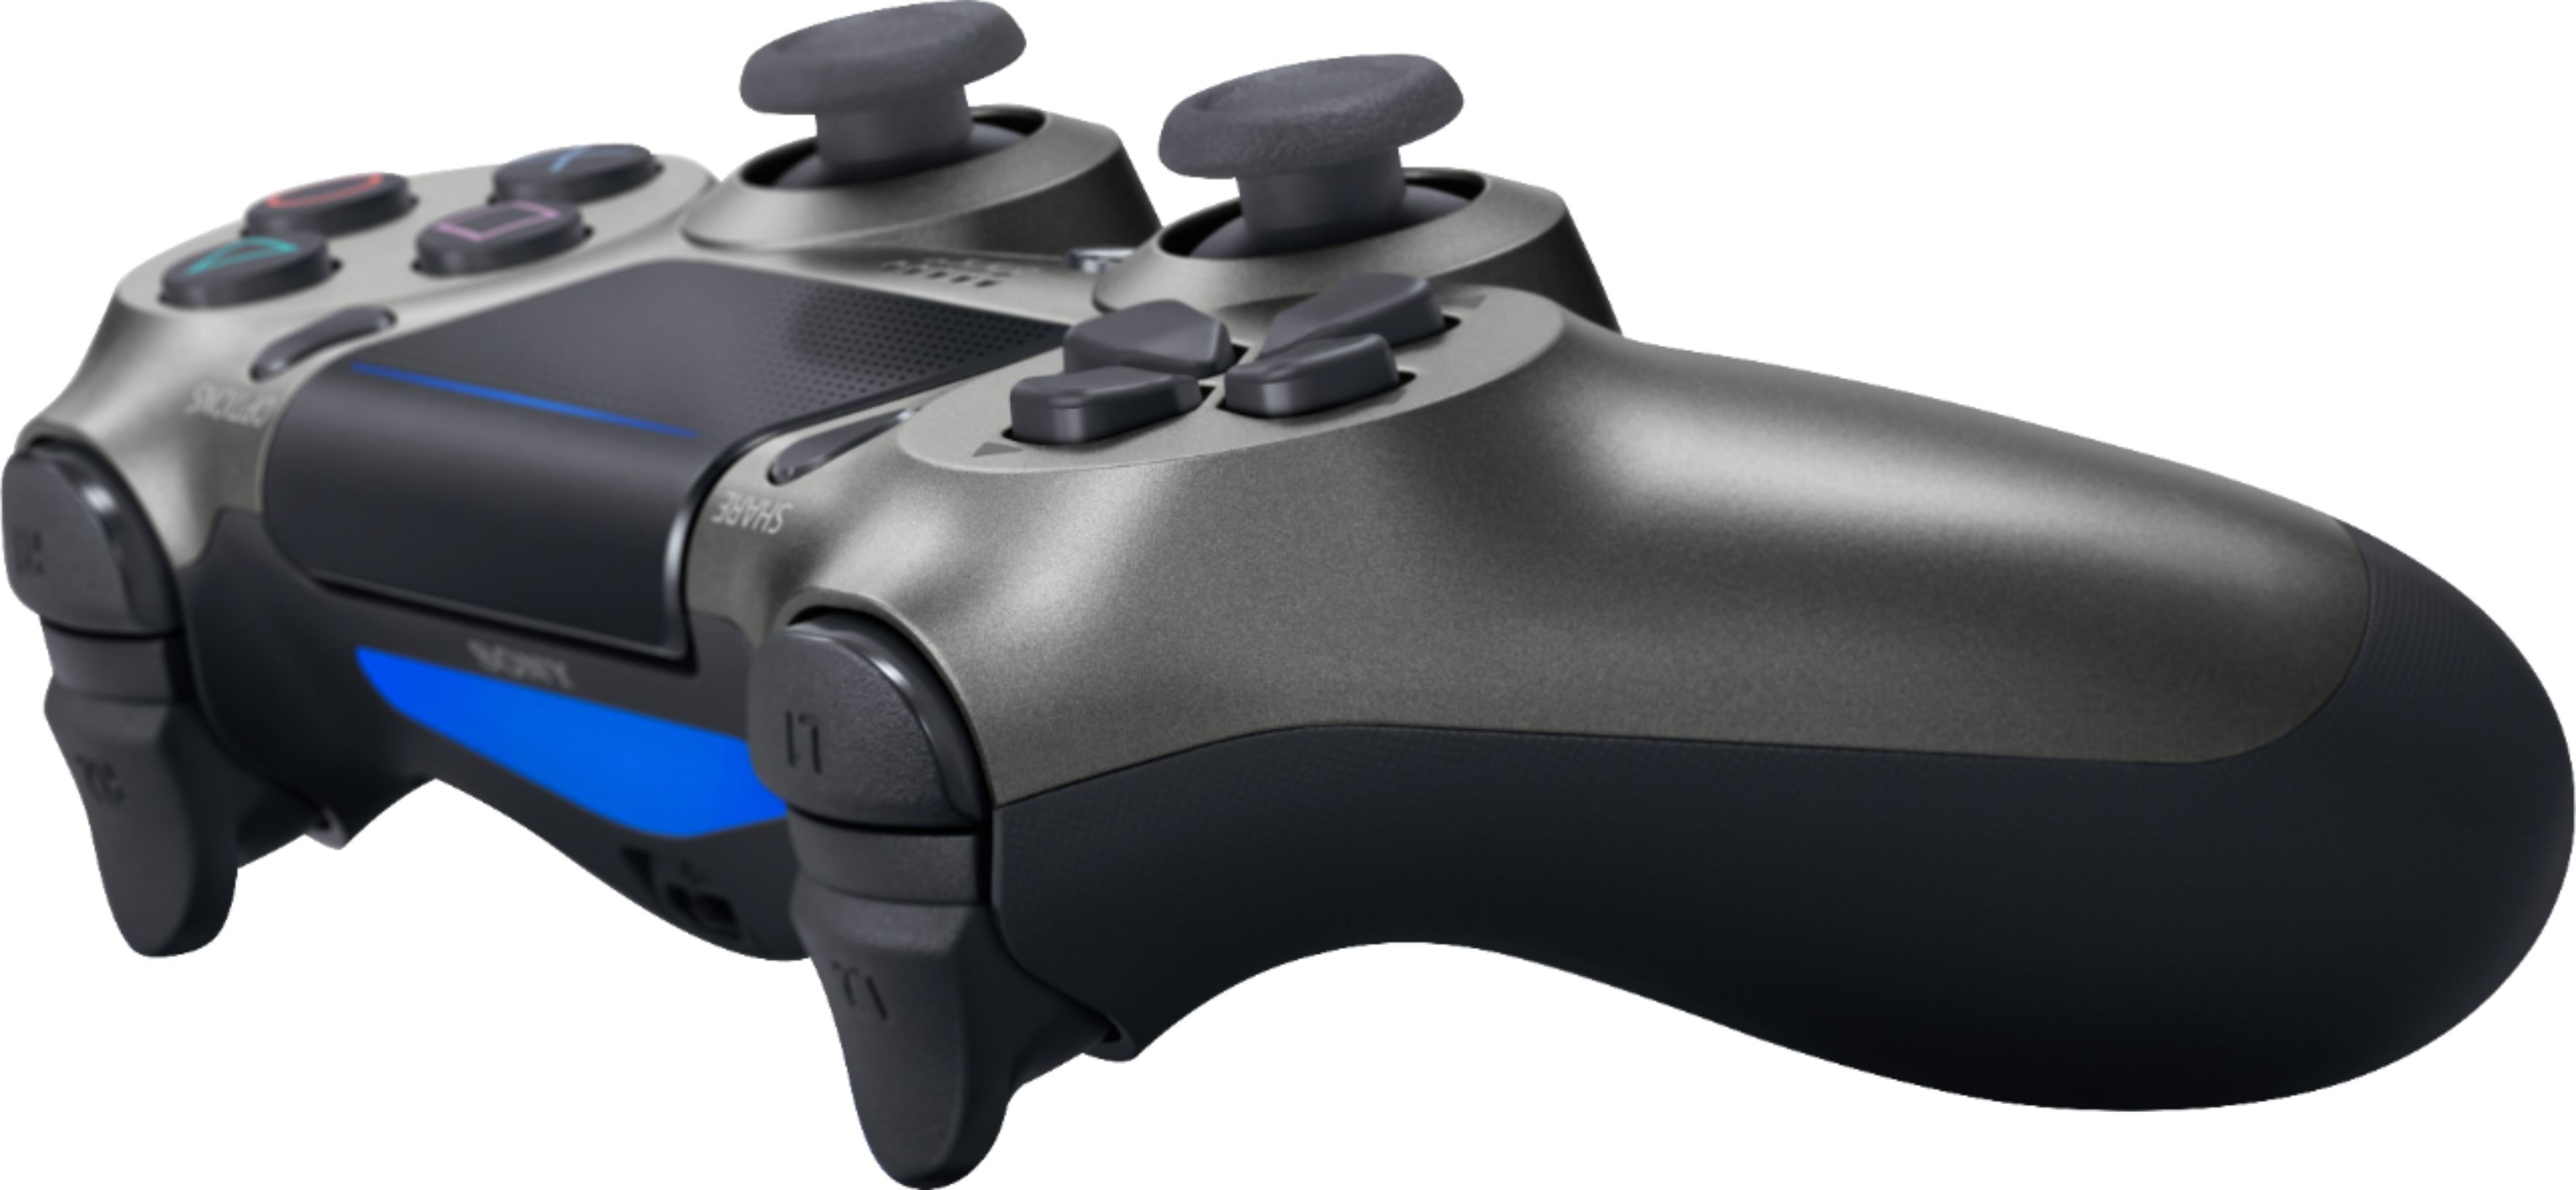 Restored DualShock 4 Wireless Controller for PlayStation 4 - Steel Black  (Refurbished)